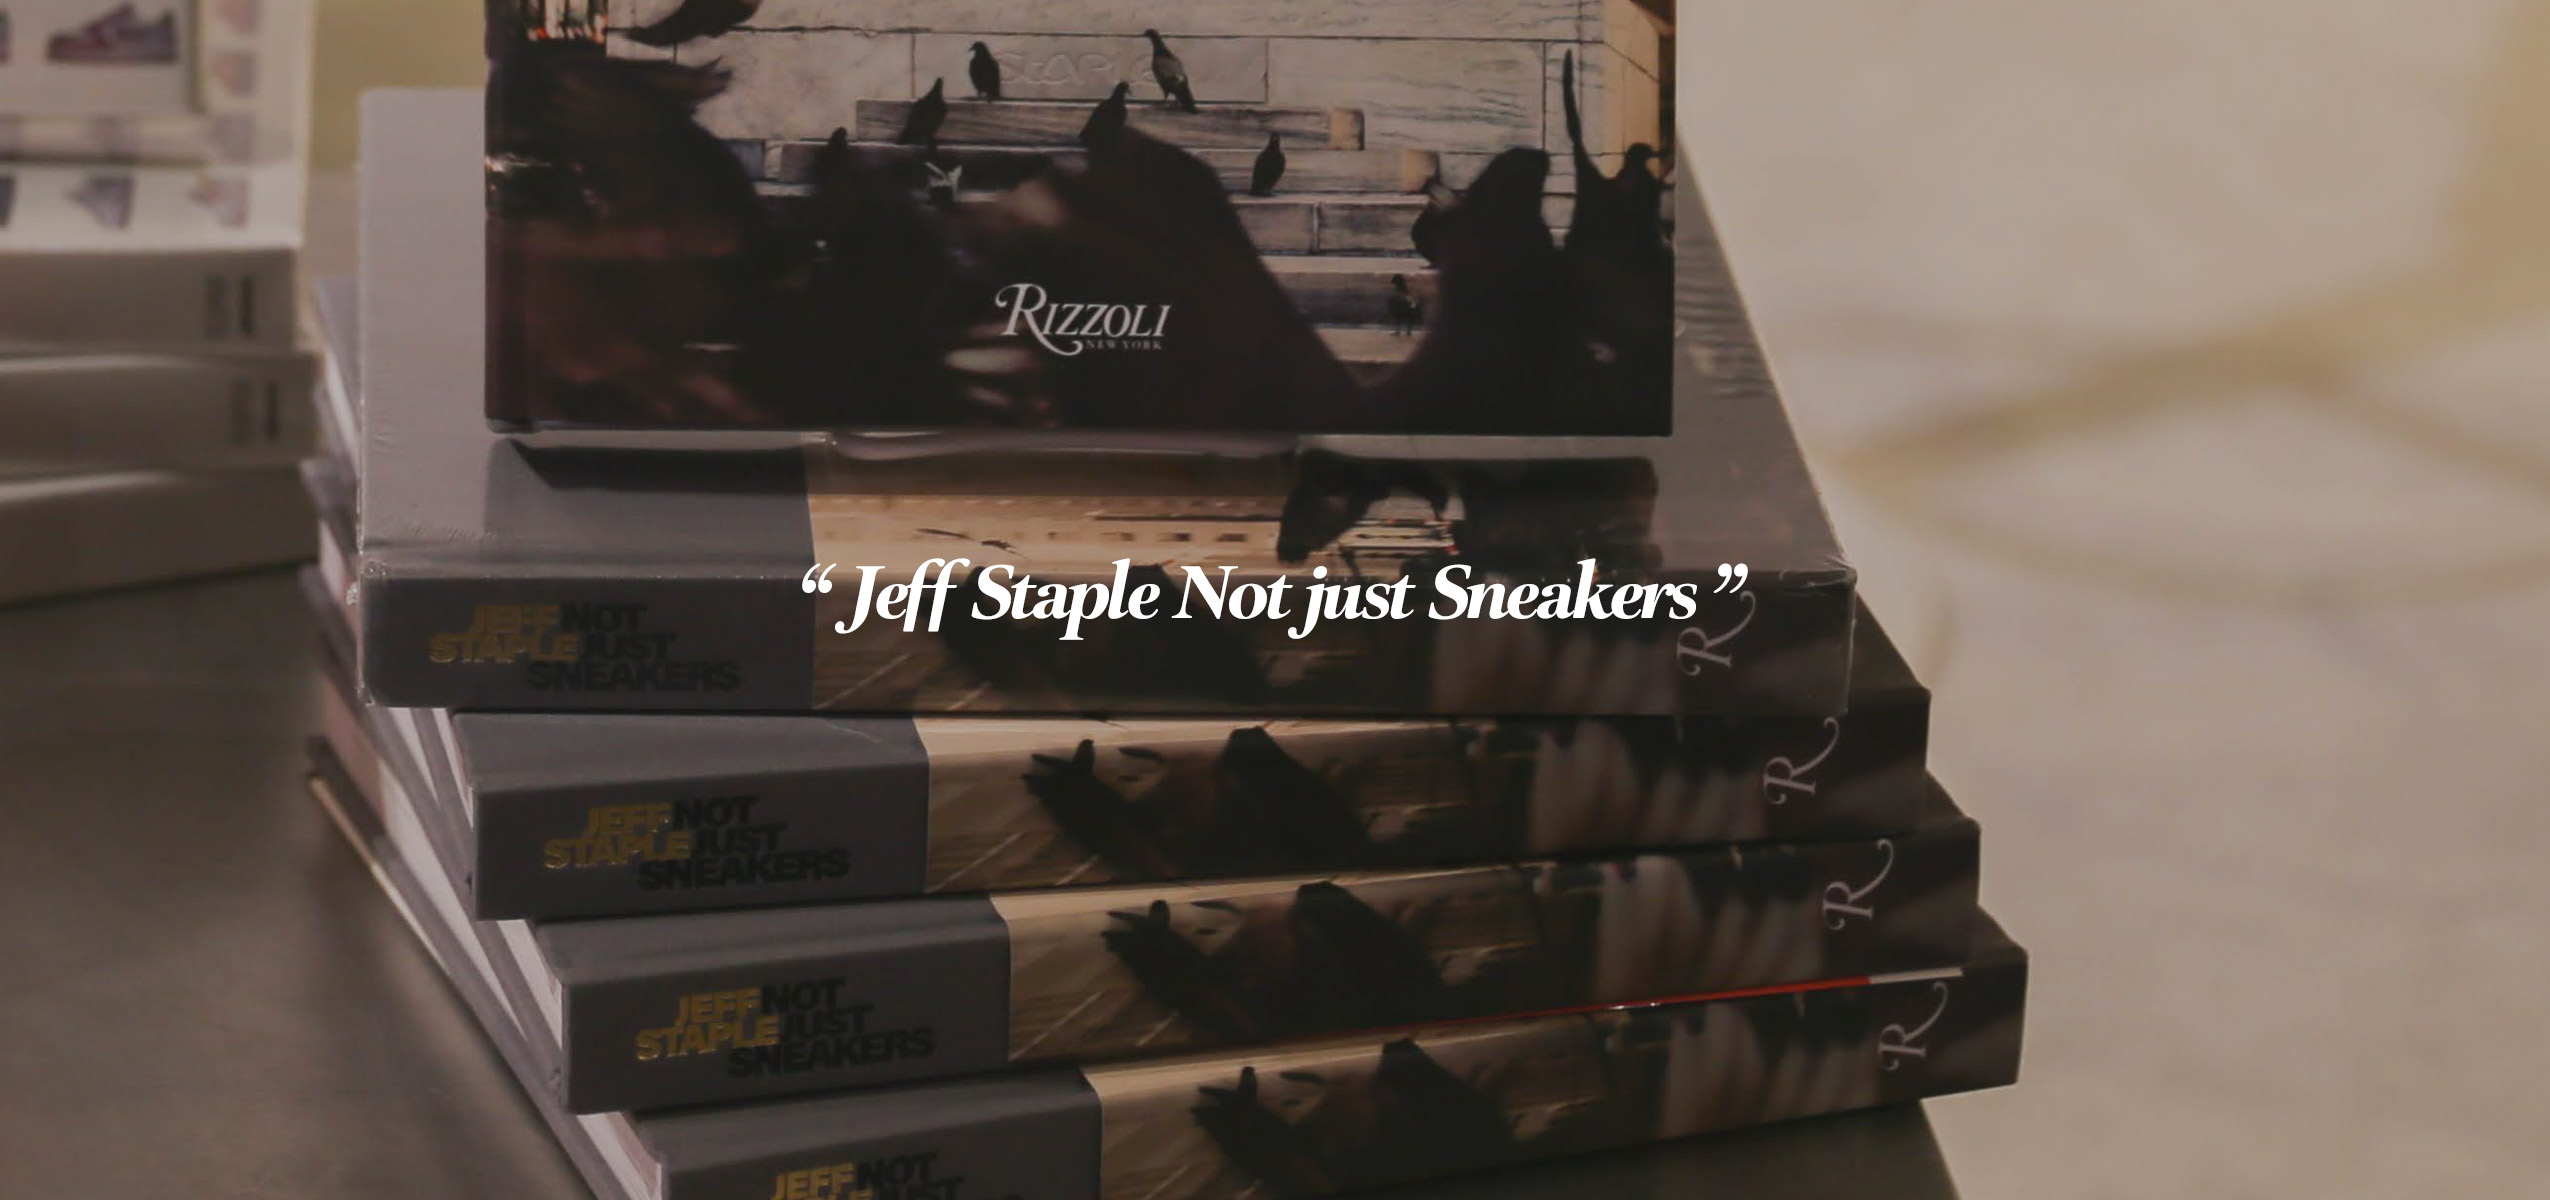 "Jeff Staple Not just Sneakers"